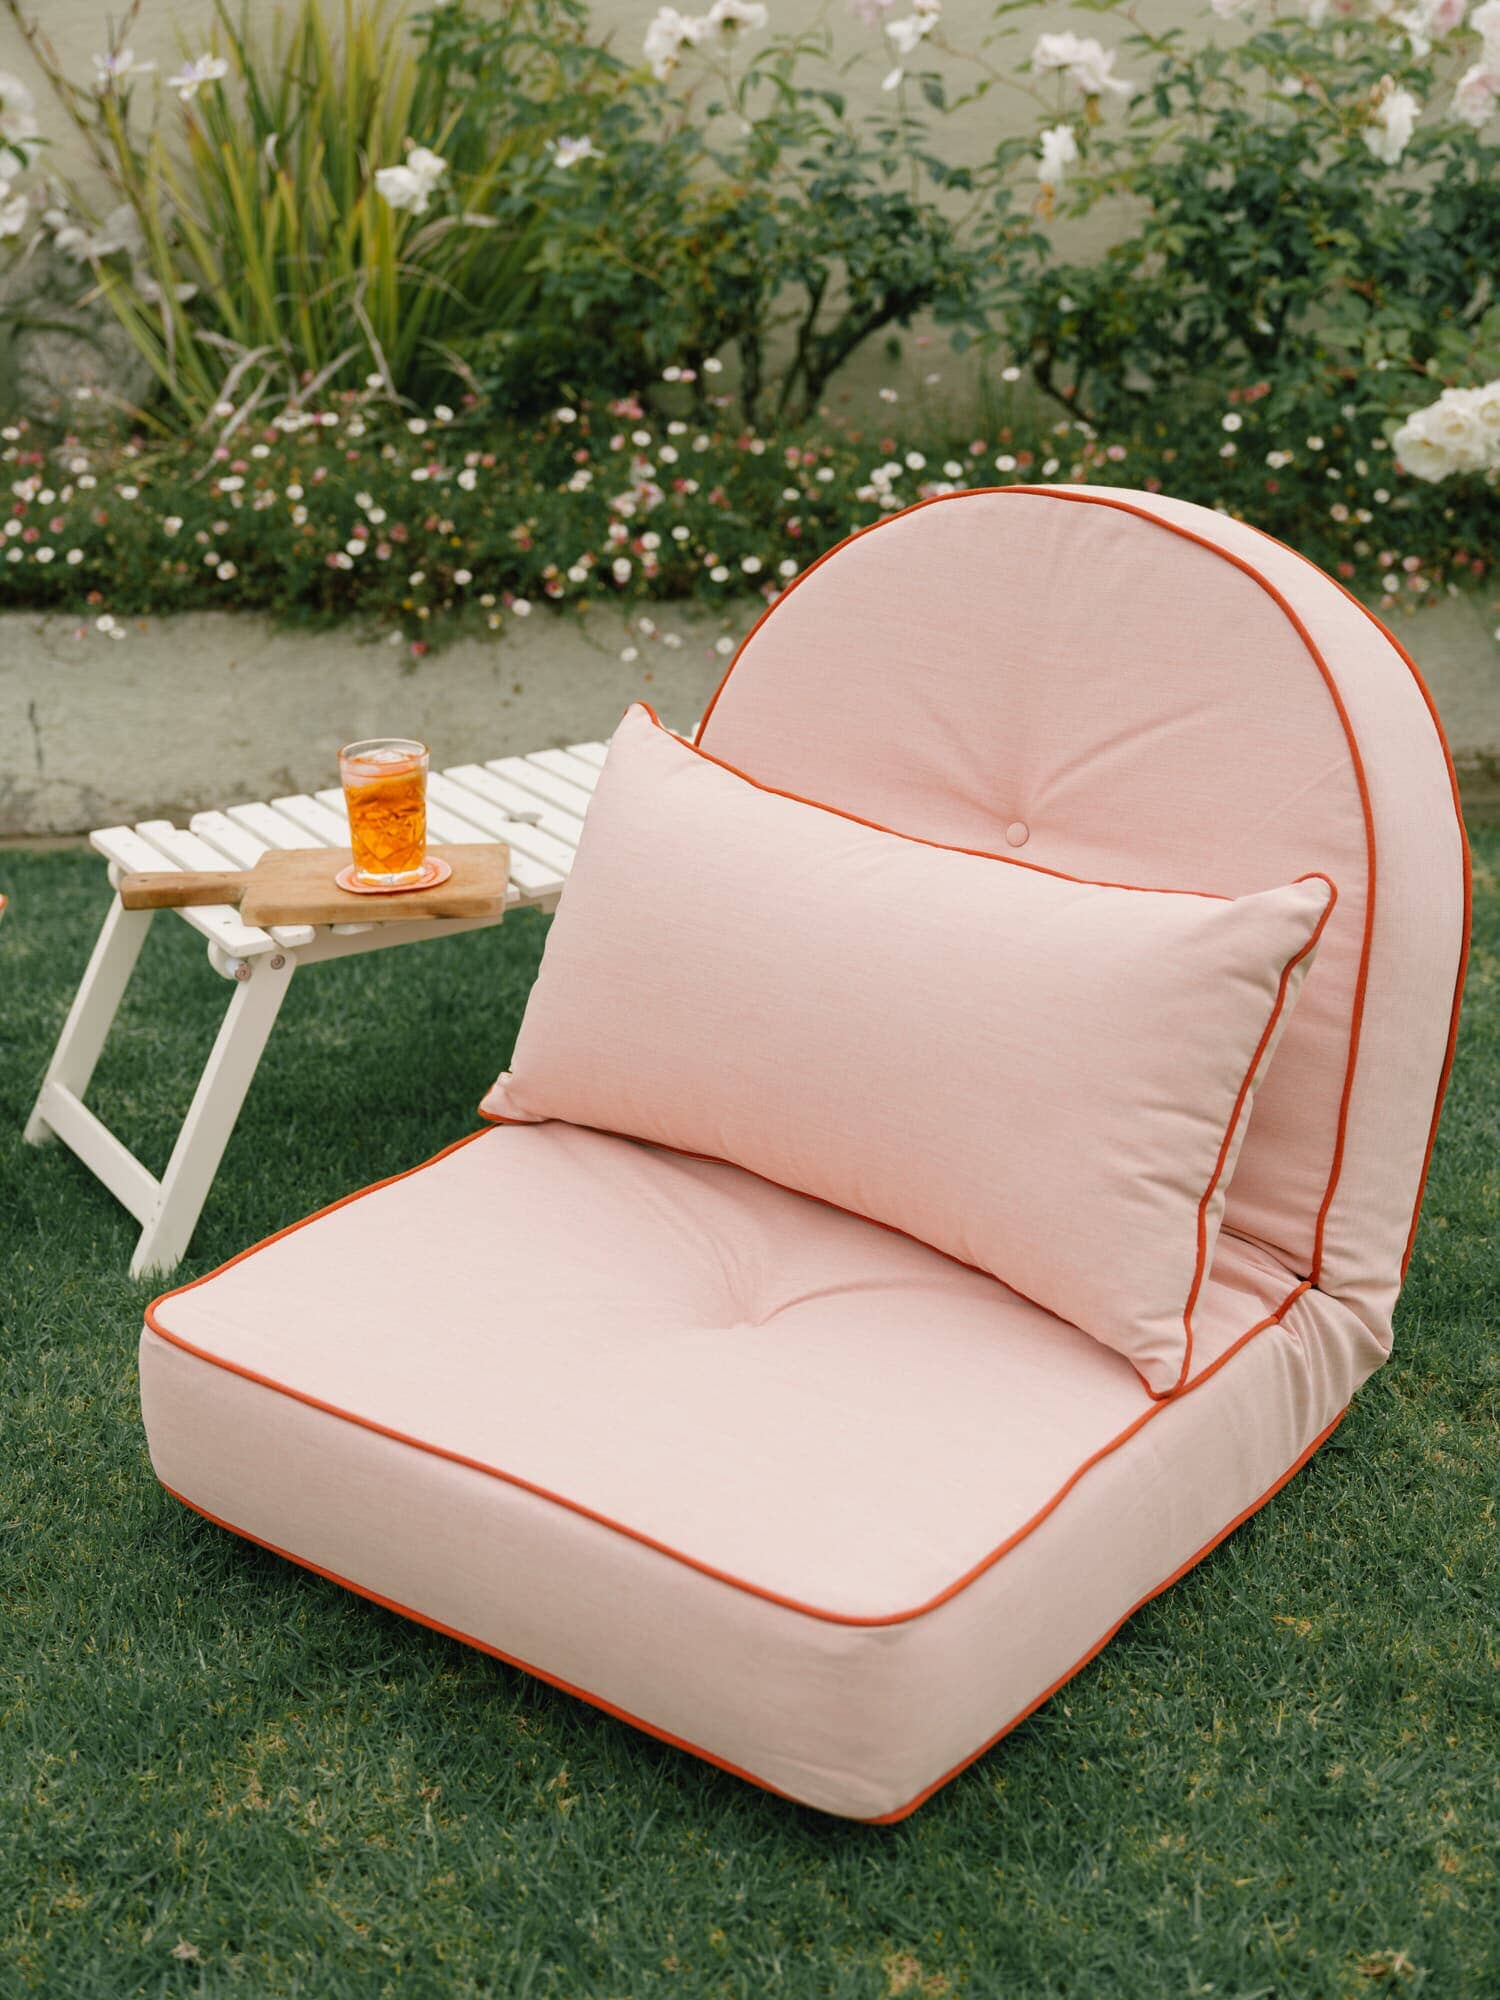 Riviera pink throw pillow on reclining pillow lounger in a garden setting